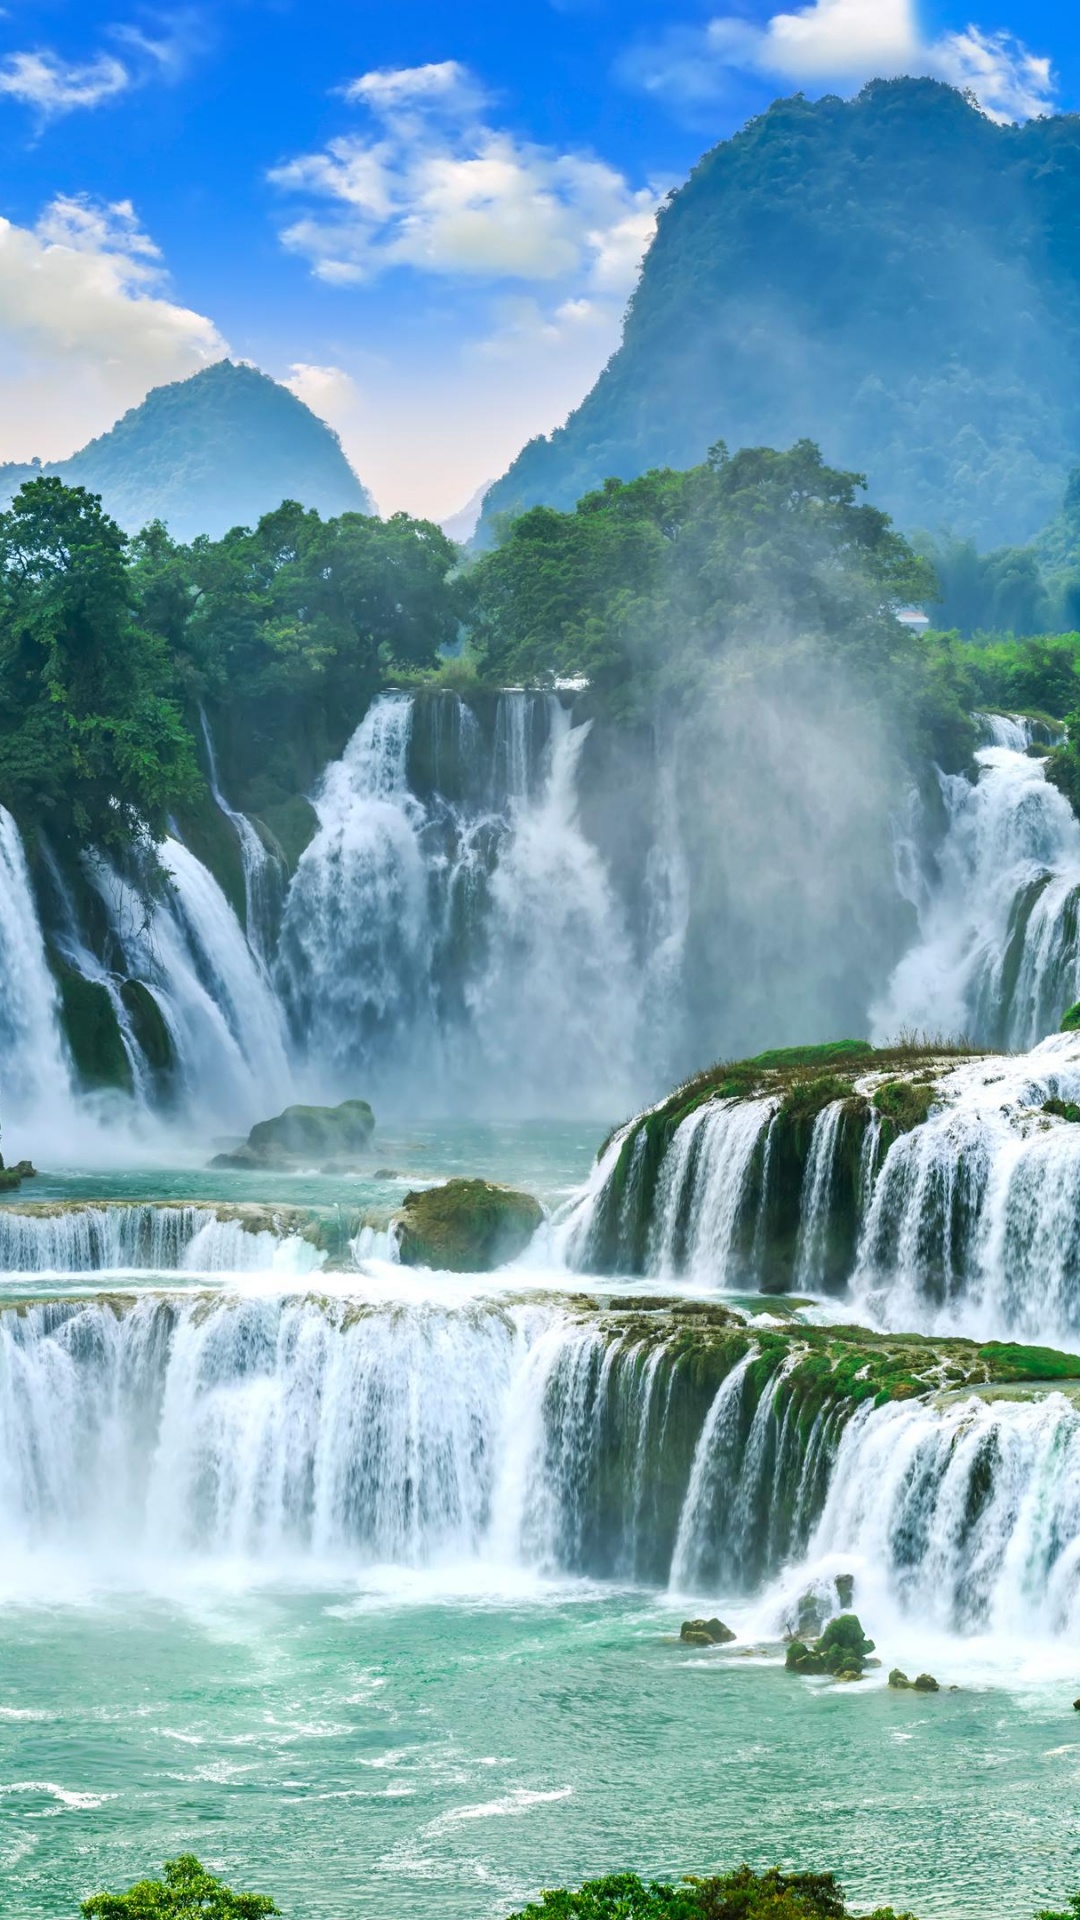 安赫尔瀑布, 菩提瀑布Latehar, Kuang si Waterfall, Chongzuo, 旅行 壁纸 1080x1920 允许